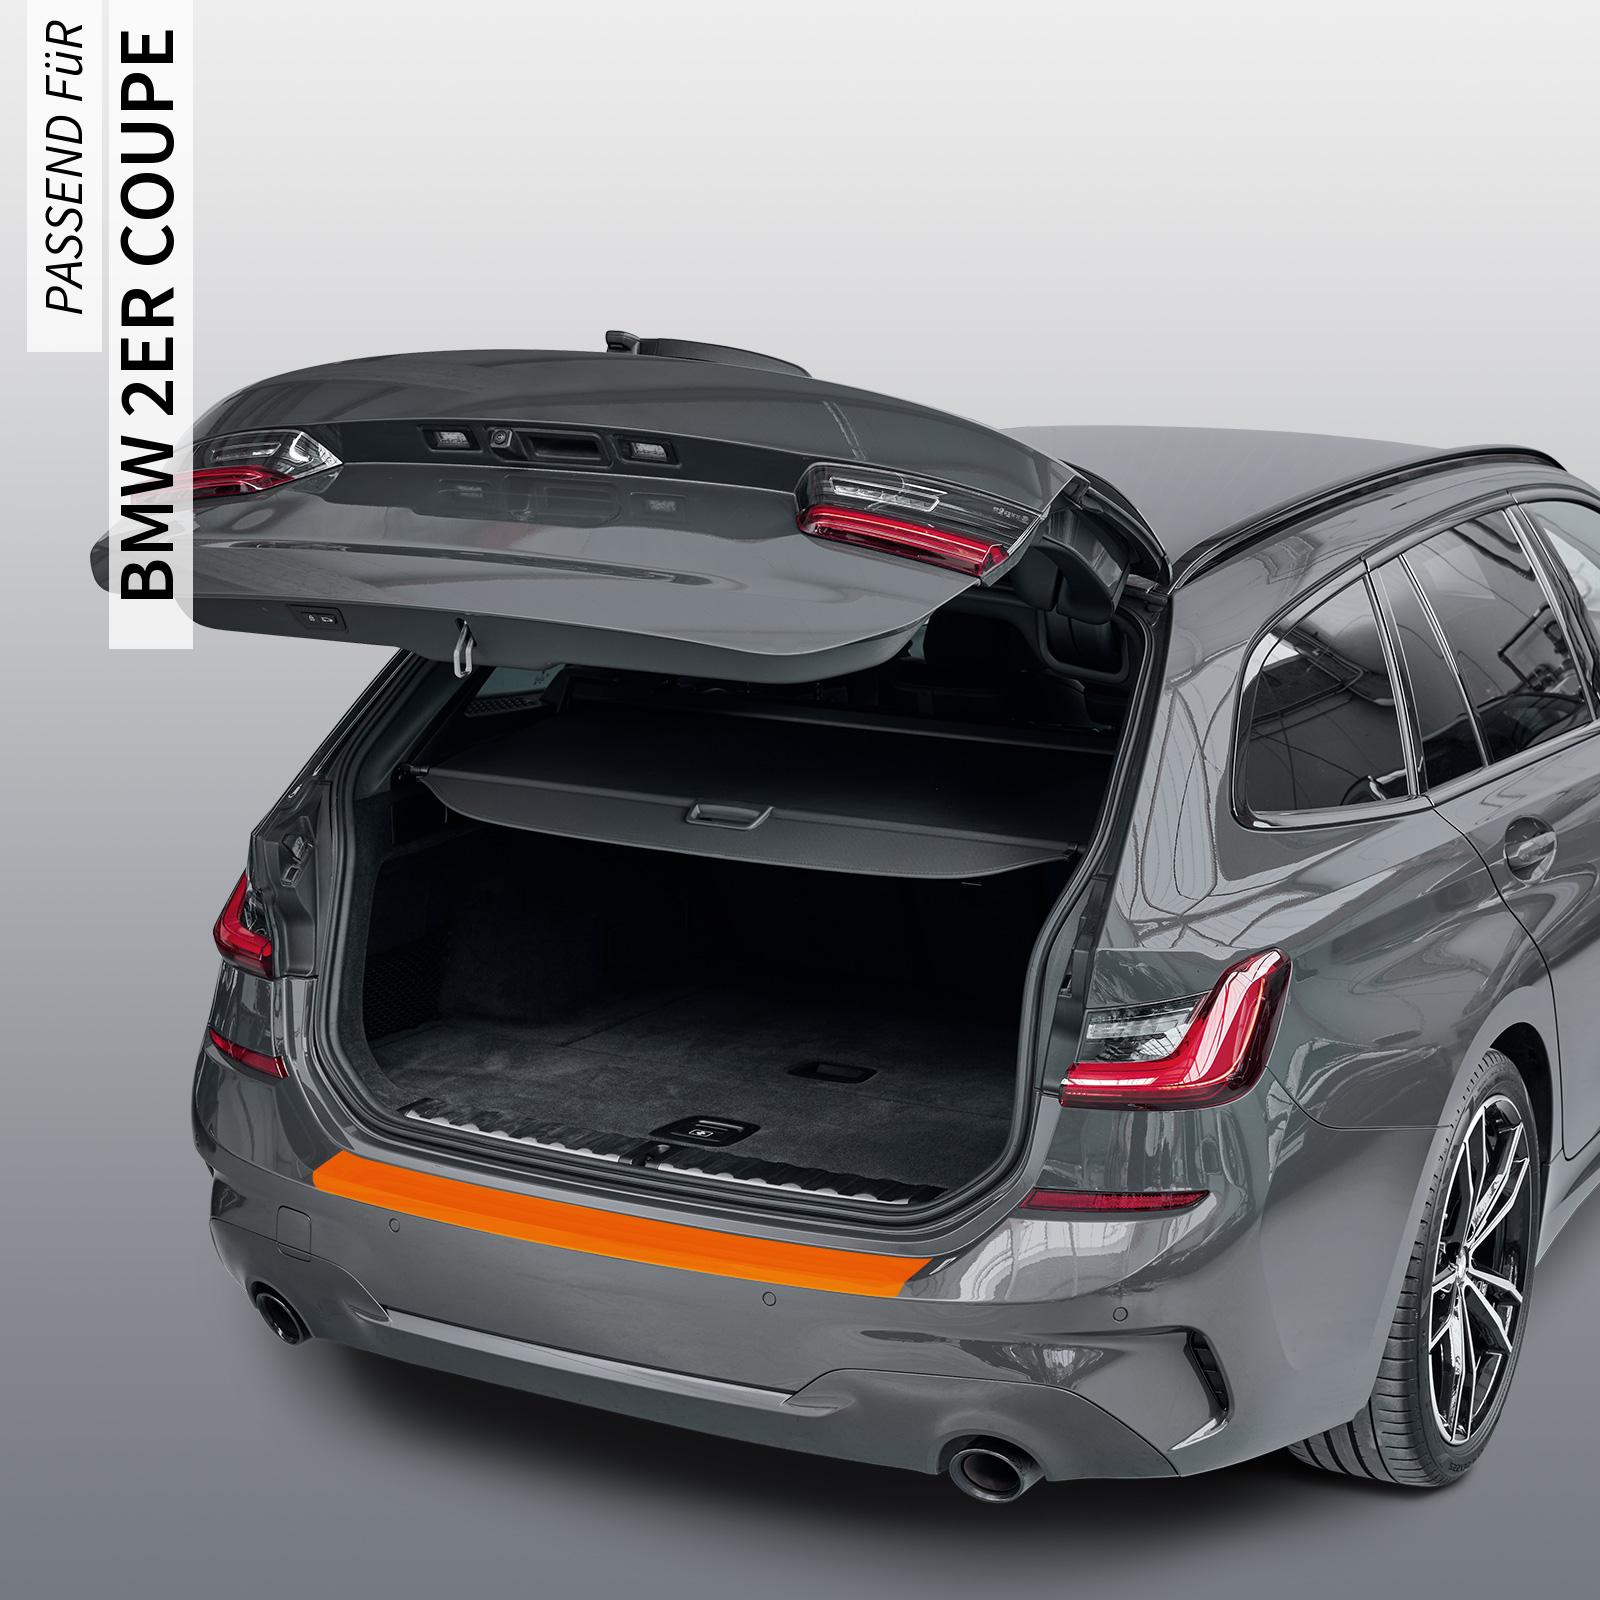 Ladekantenschutzfolie - Transparent Glatt MATT 110 µm stark  für BMW 2er Coupe Typ F22, BJ 11/2013-2021